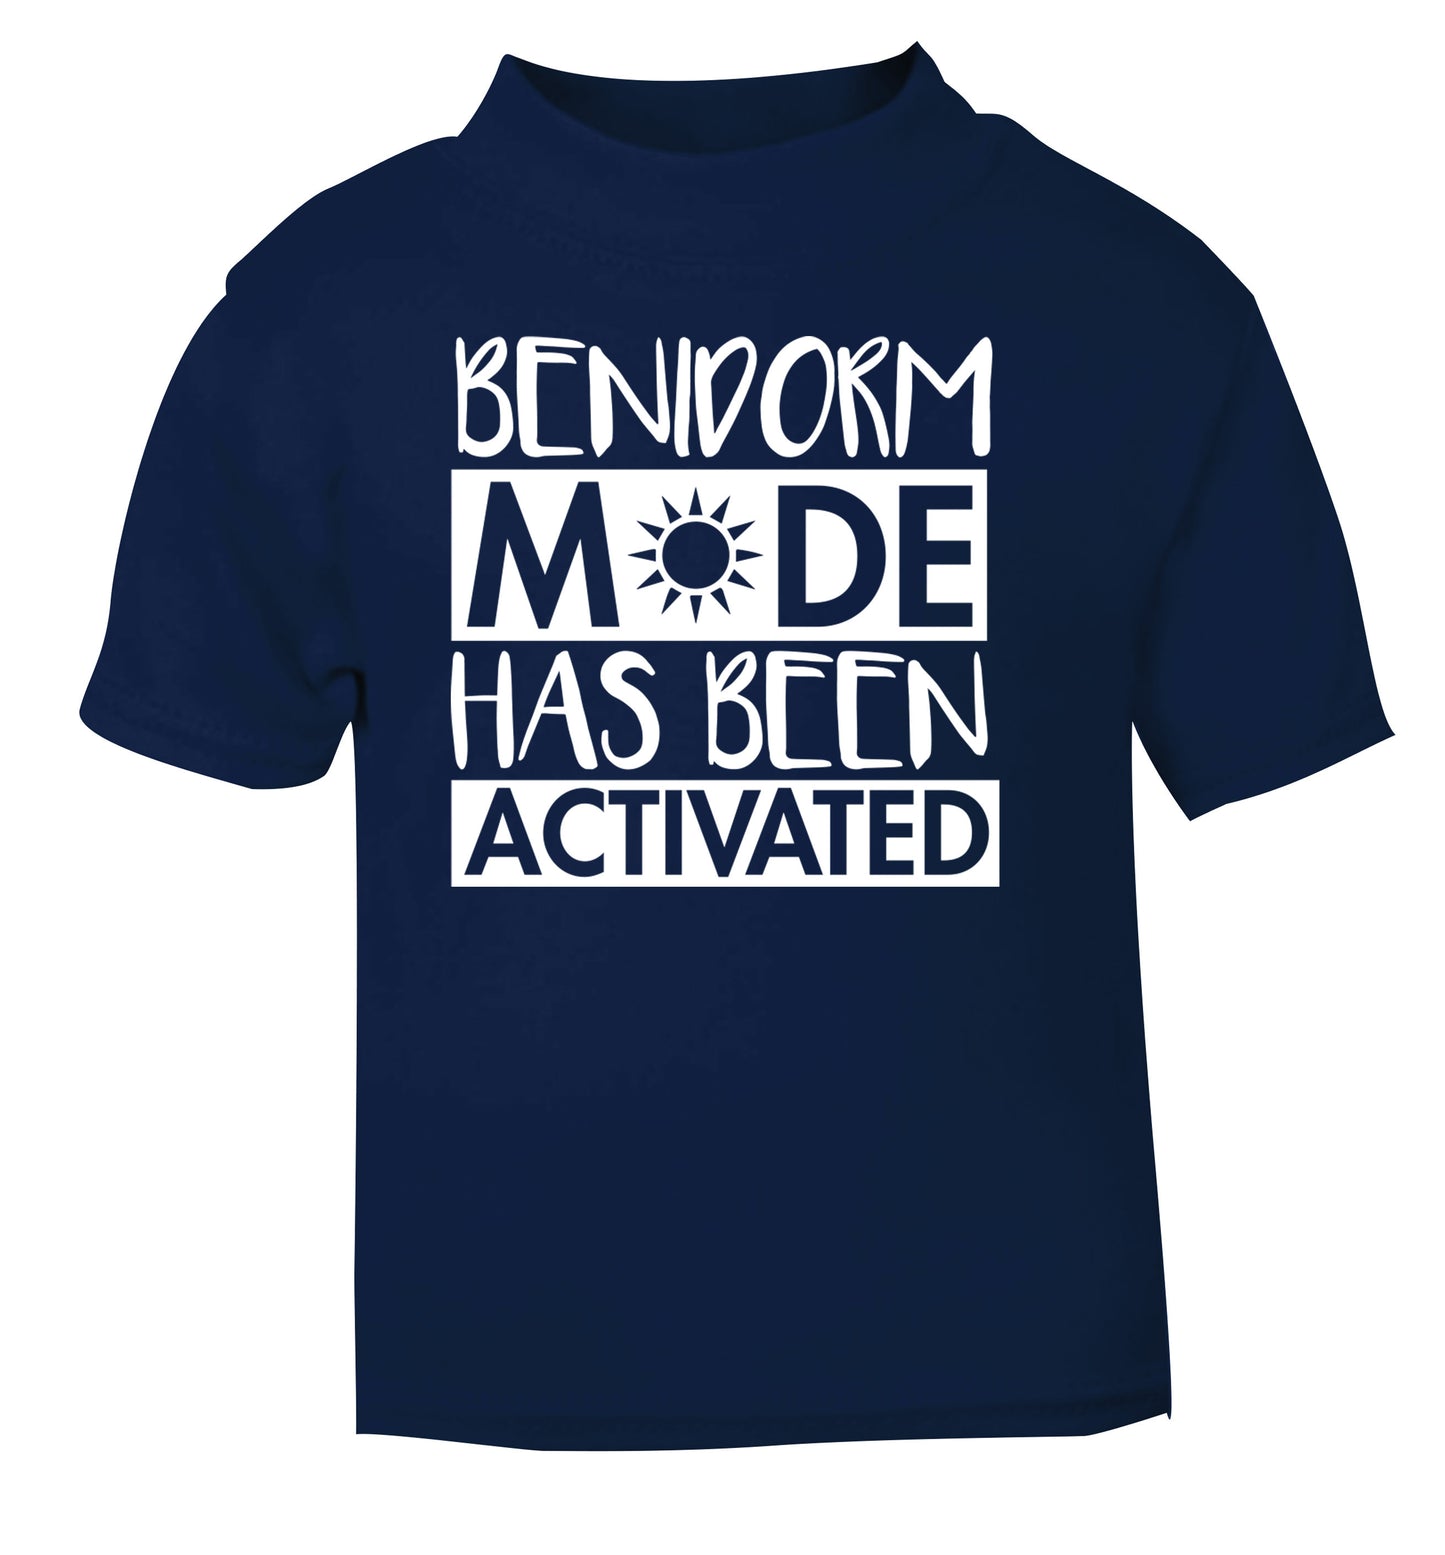 Benidorm mode has been activated navy Baby Toddler Tshirt 2 Years